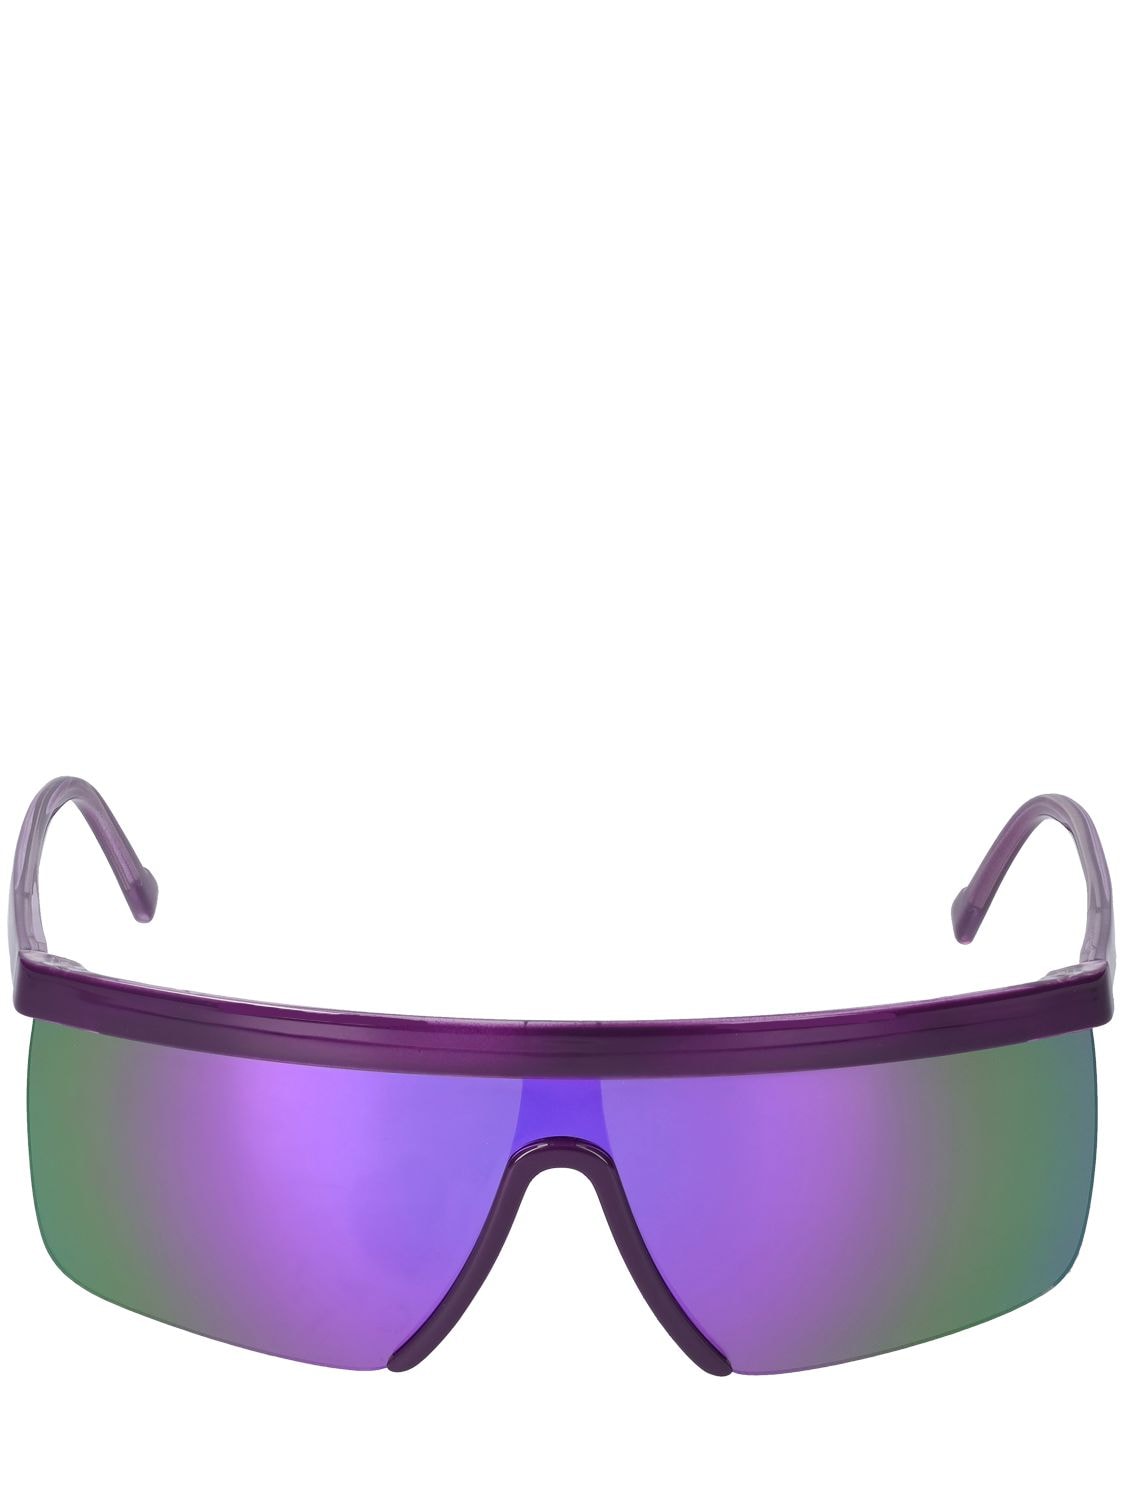 Image of Mask Acetate Sunglasses W/ Mirror Lens